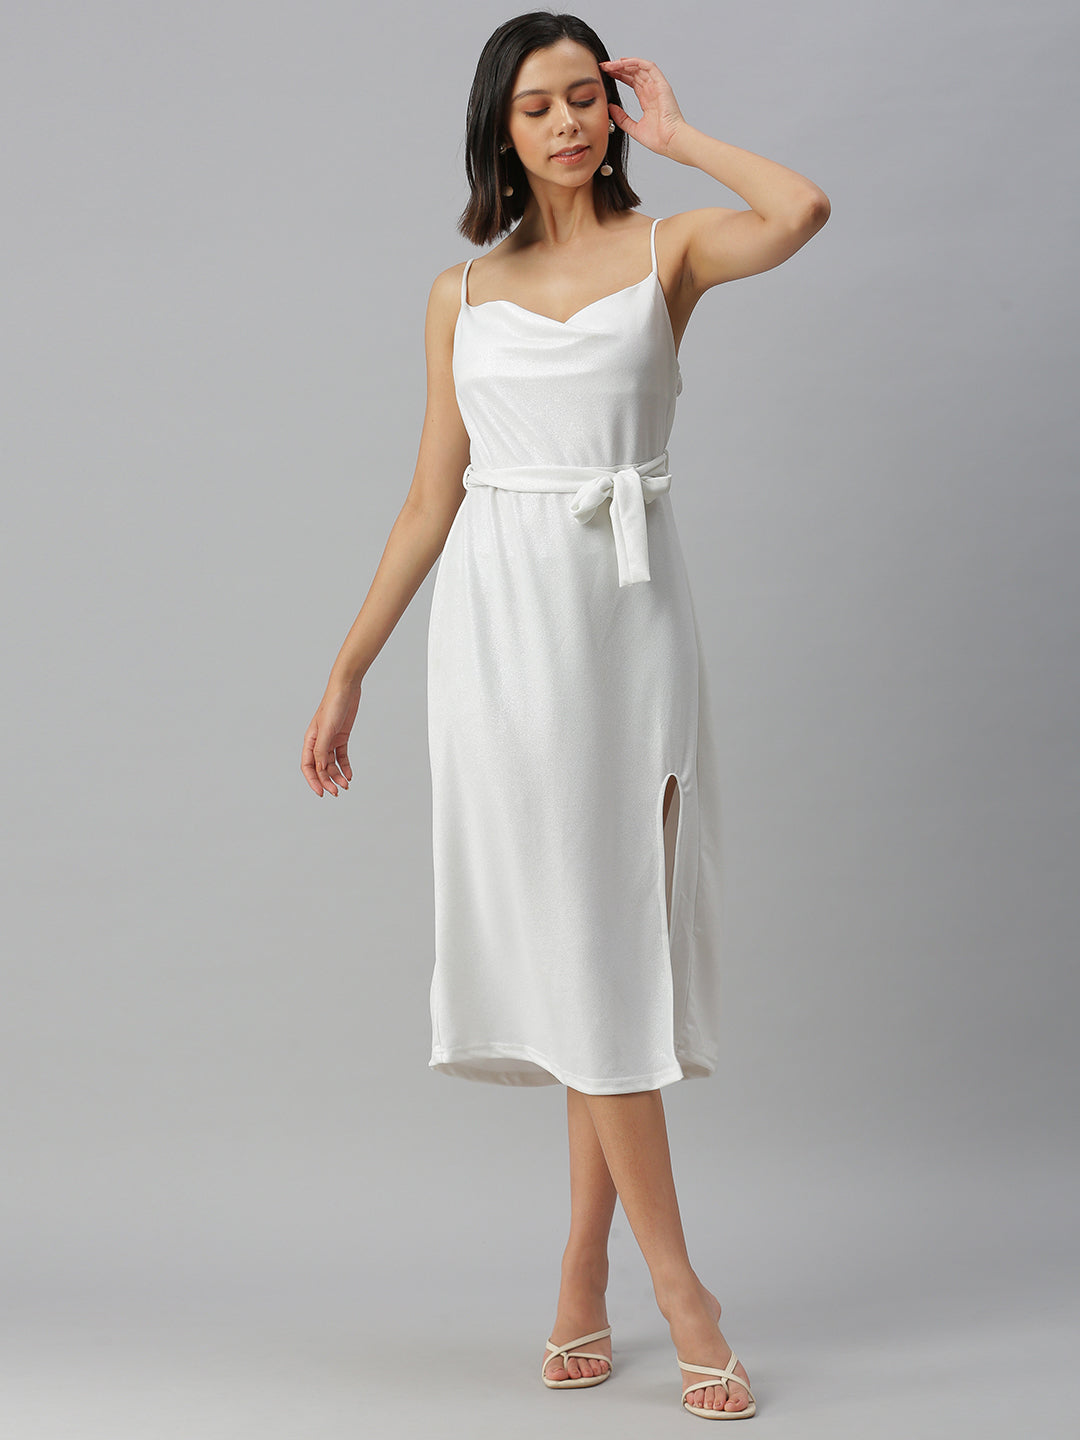 Women's White Solid Sheath Dress